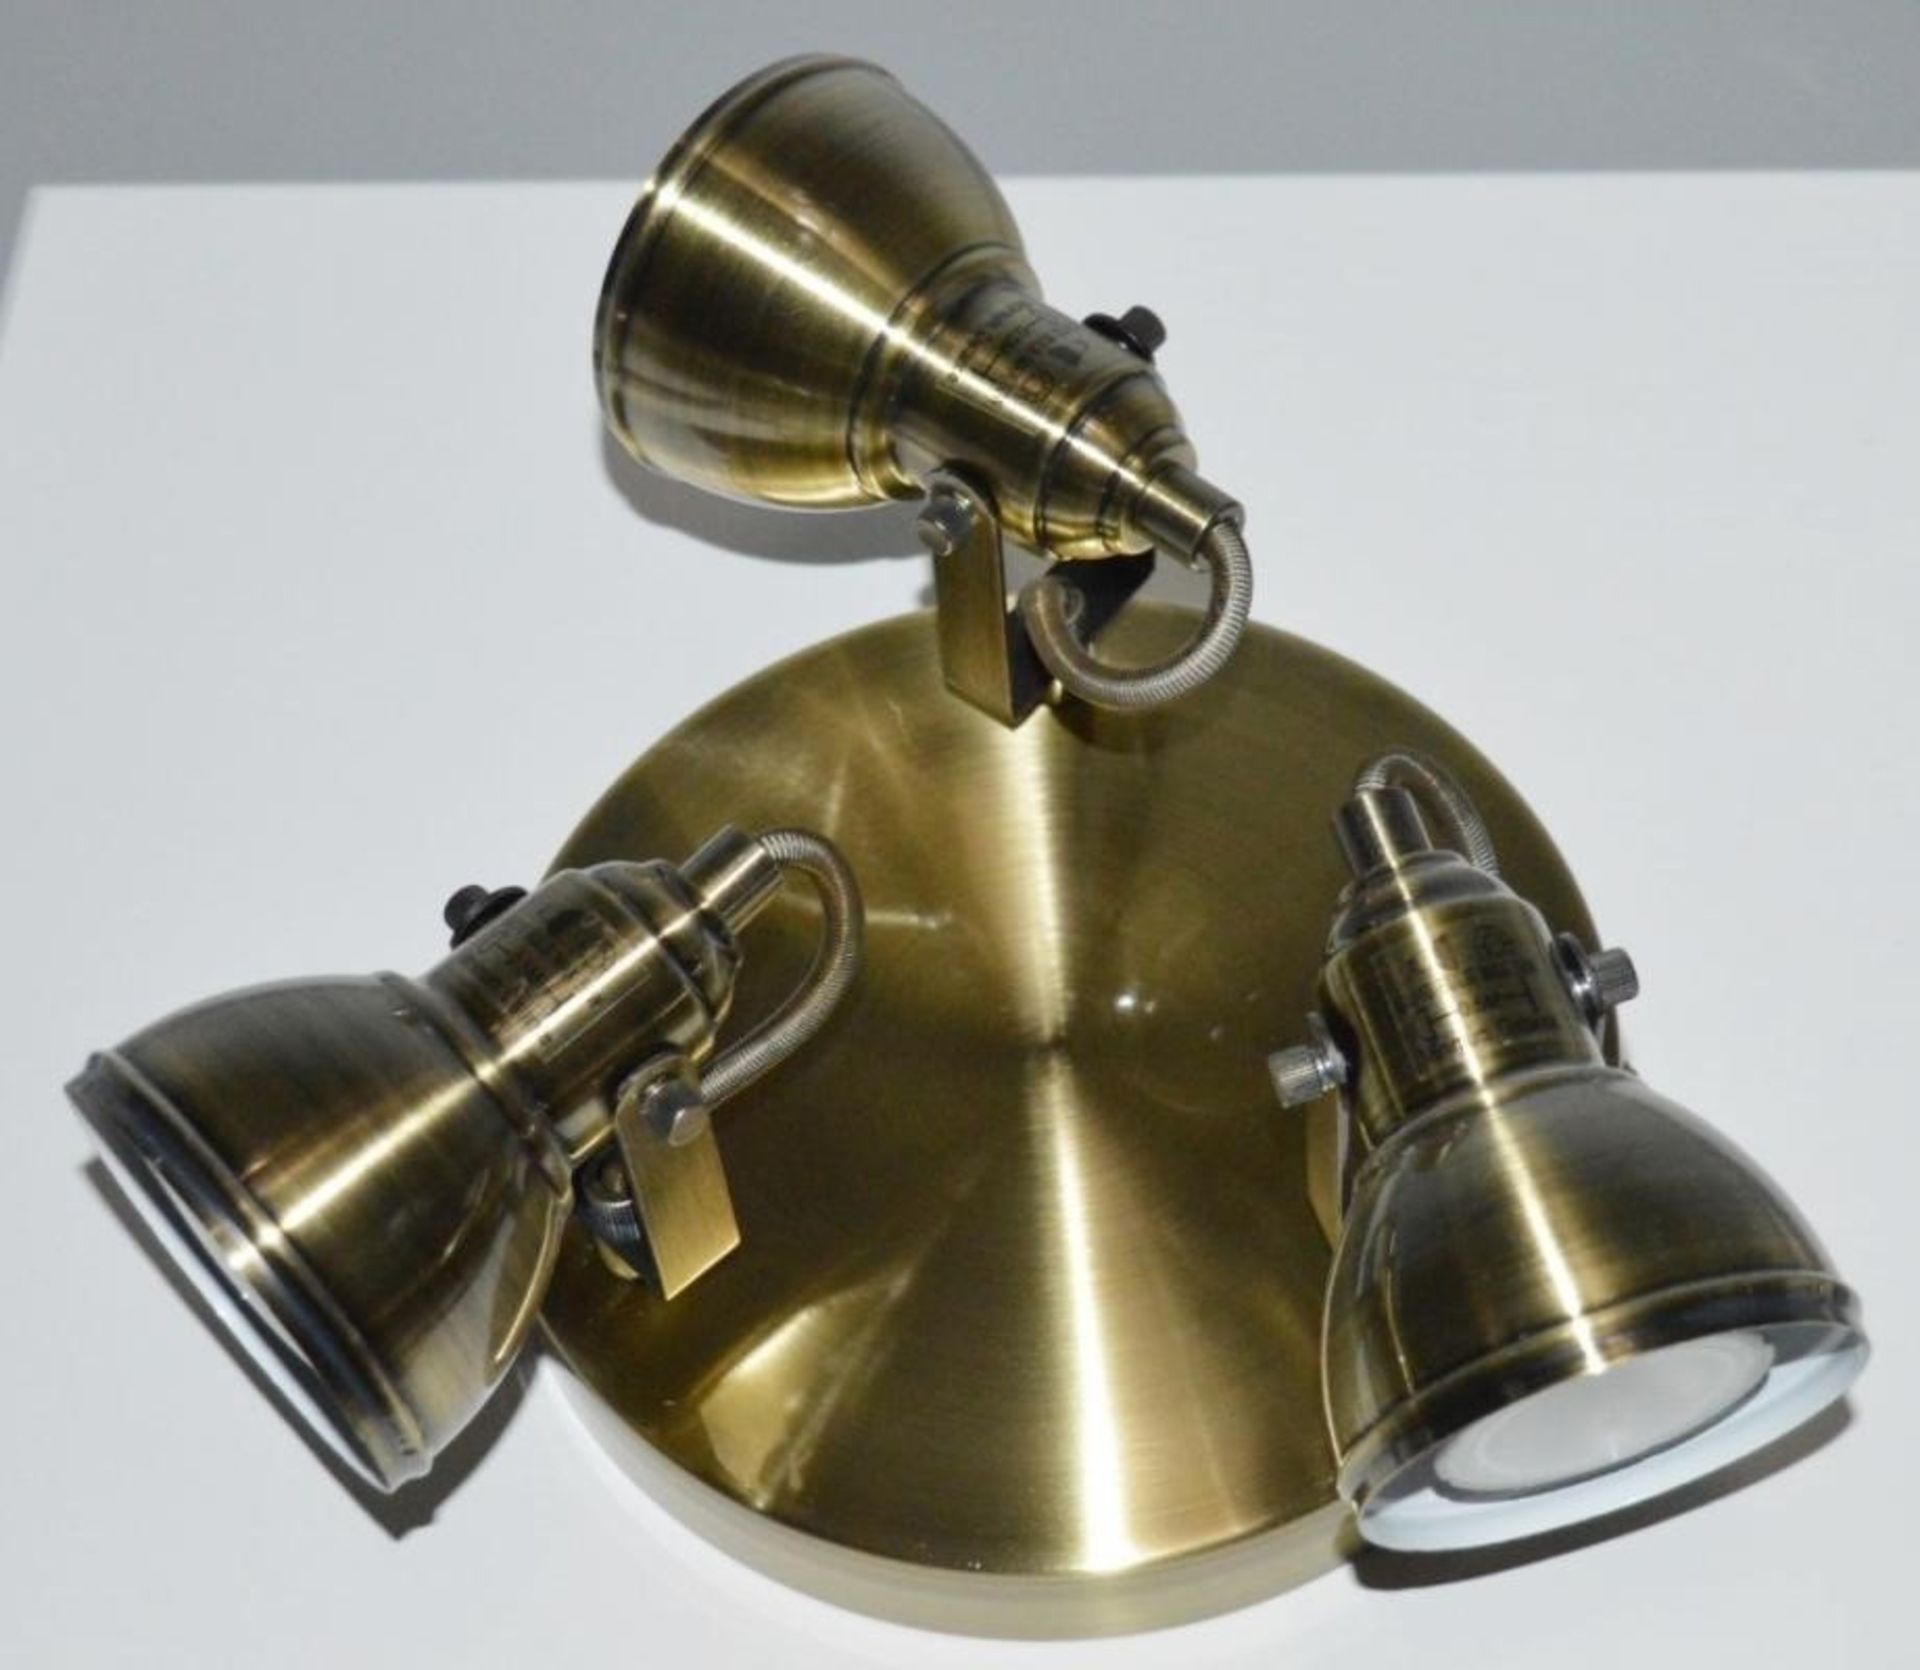 1 x Focus Antique Brass Trio Industrial Spotlight - Ex Display Stock - CL298 - Ref J306 - Location: - Image 4 of 4